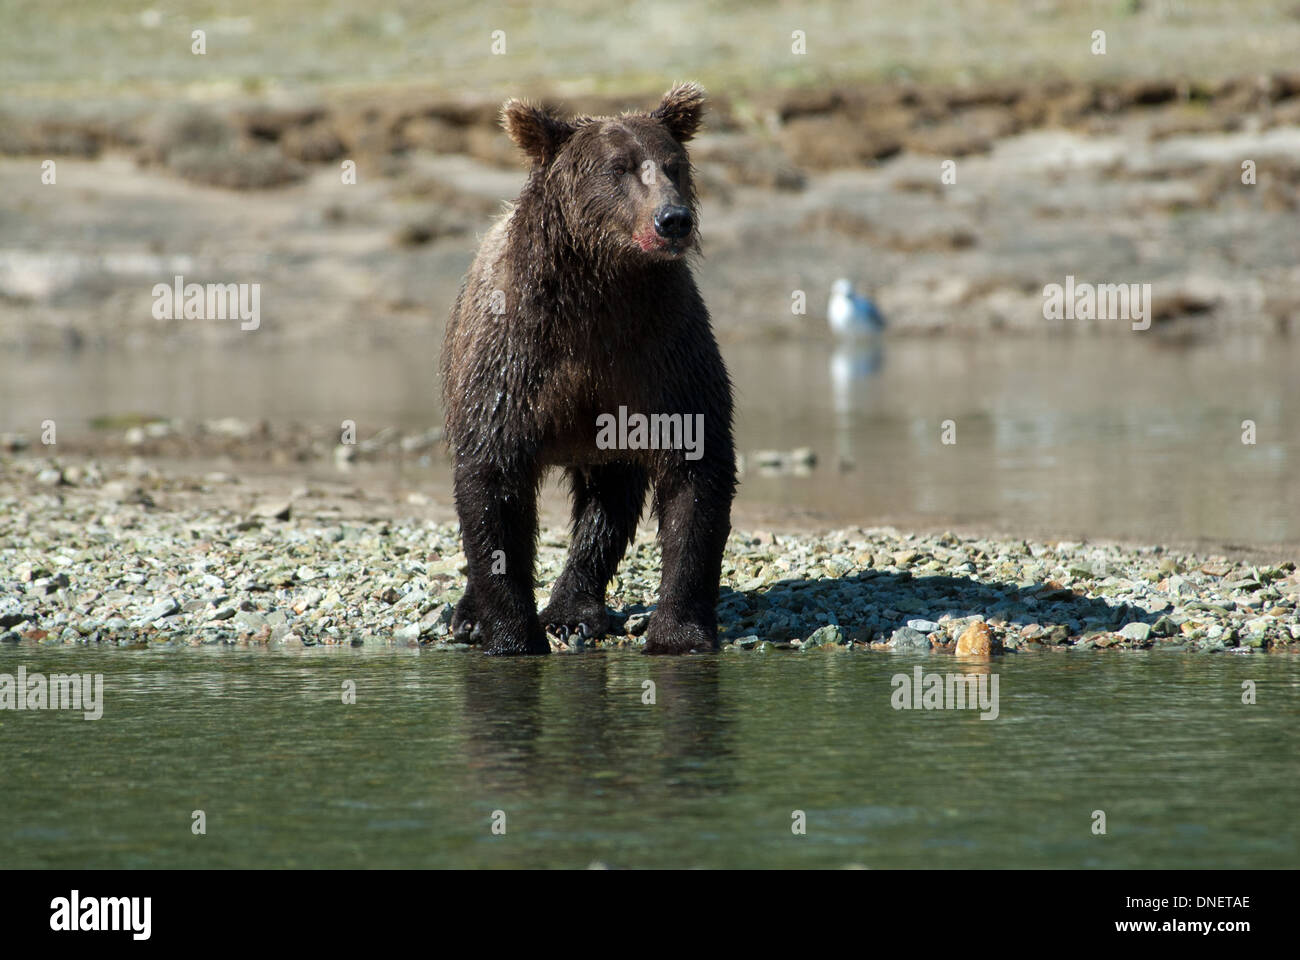 Brown bear with bloody mouth from eating salmon, Kinak Bay, Katmai NP. Alaska Stock Photo